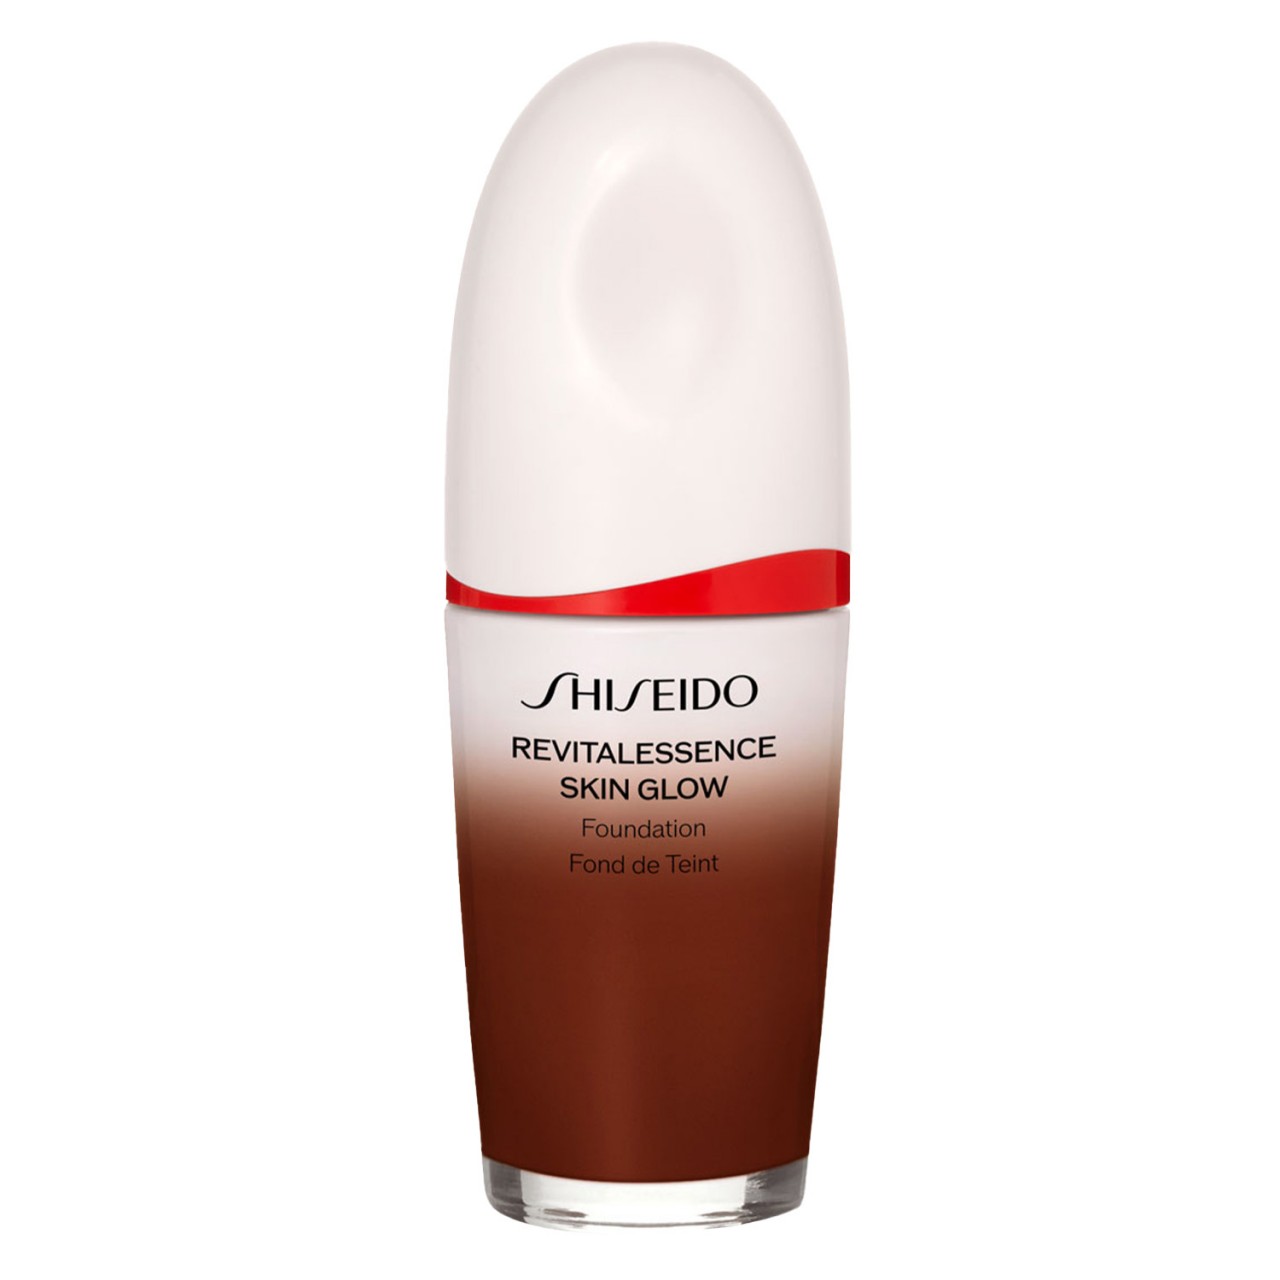 Revitalessence Skin Glow - Foundation Jasper 550 von Shiseido